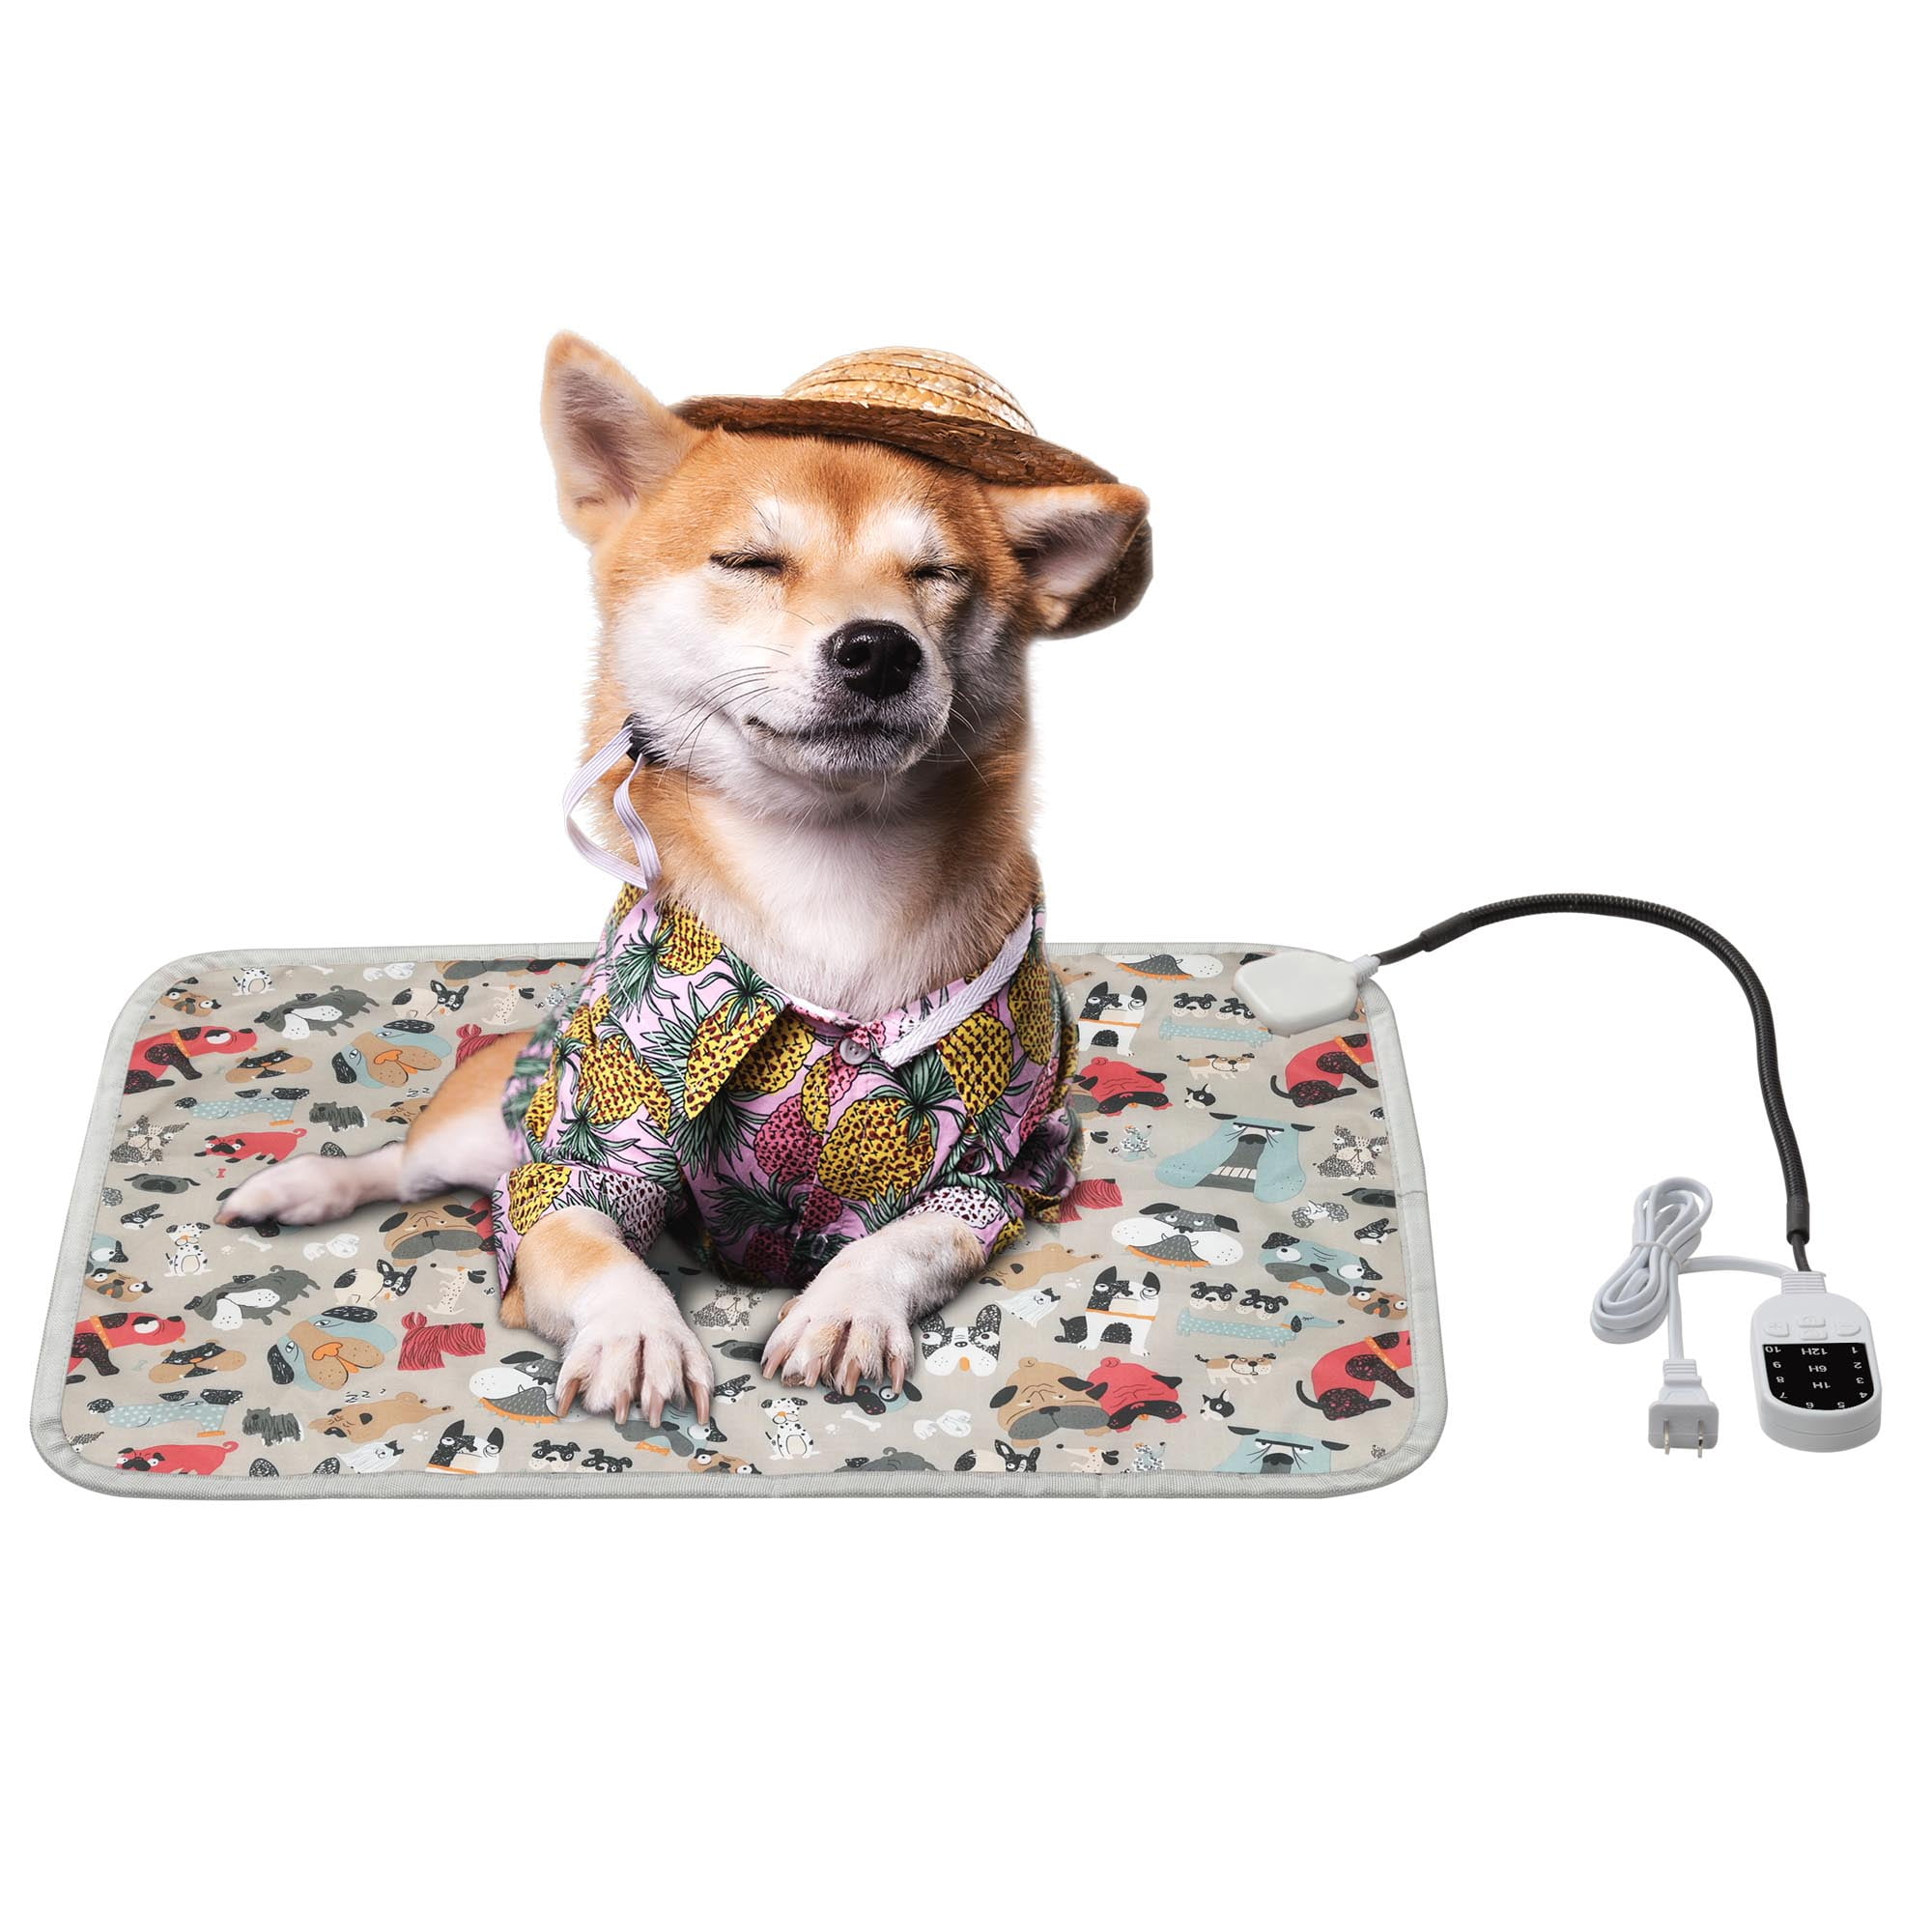 Yescom Pet Heating Pad Temperature Adjustable Warming Mat with Timer Cat Dog 